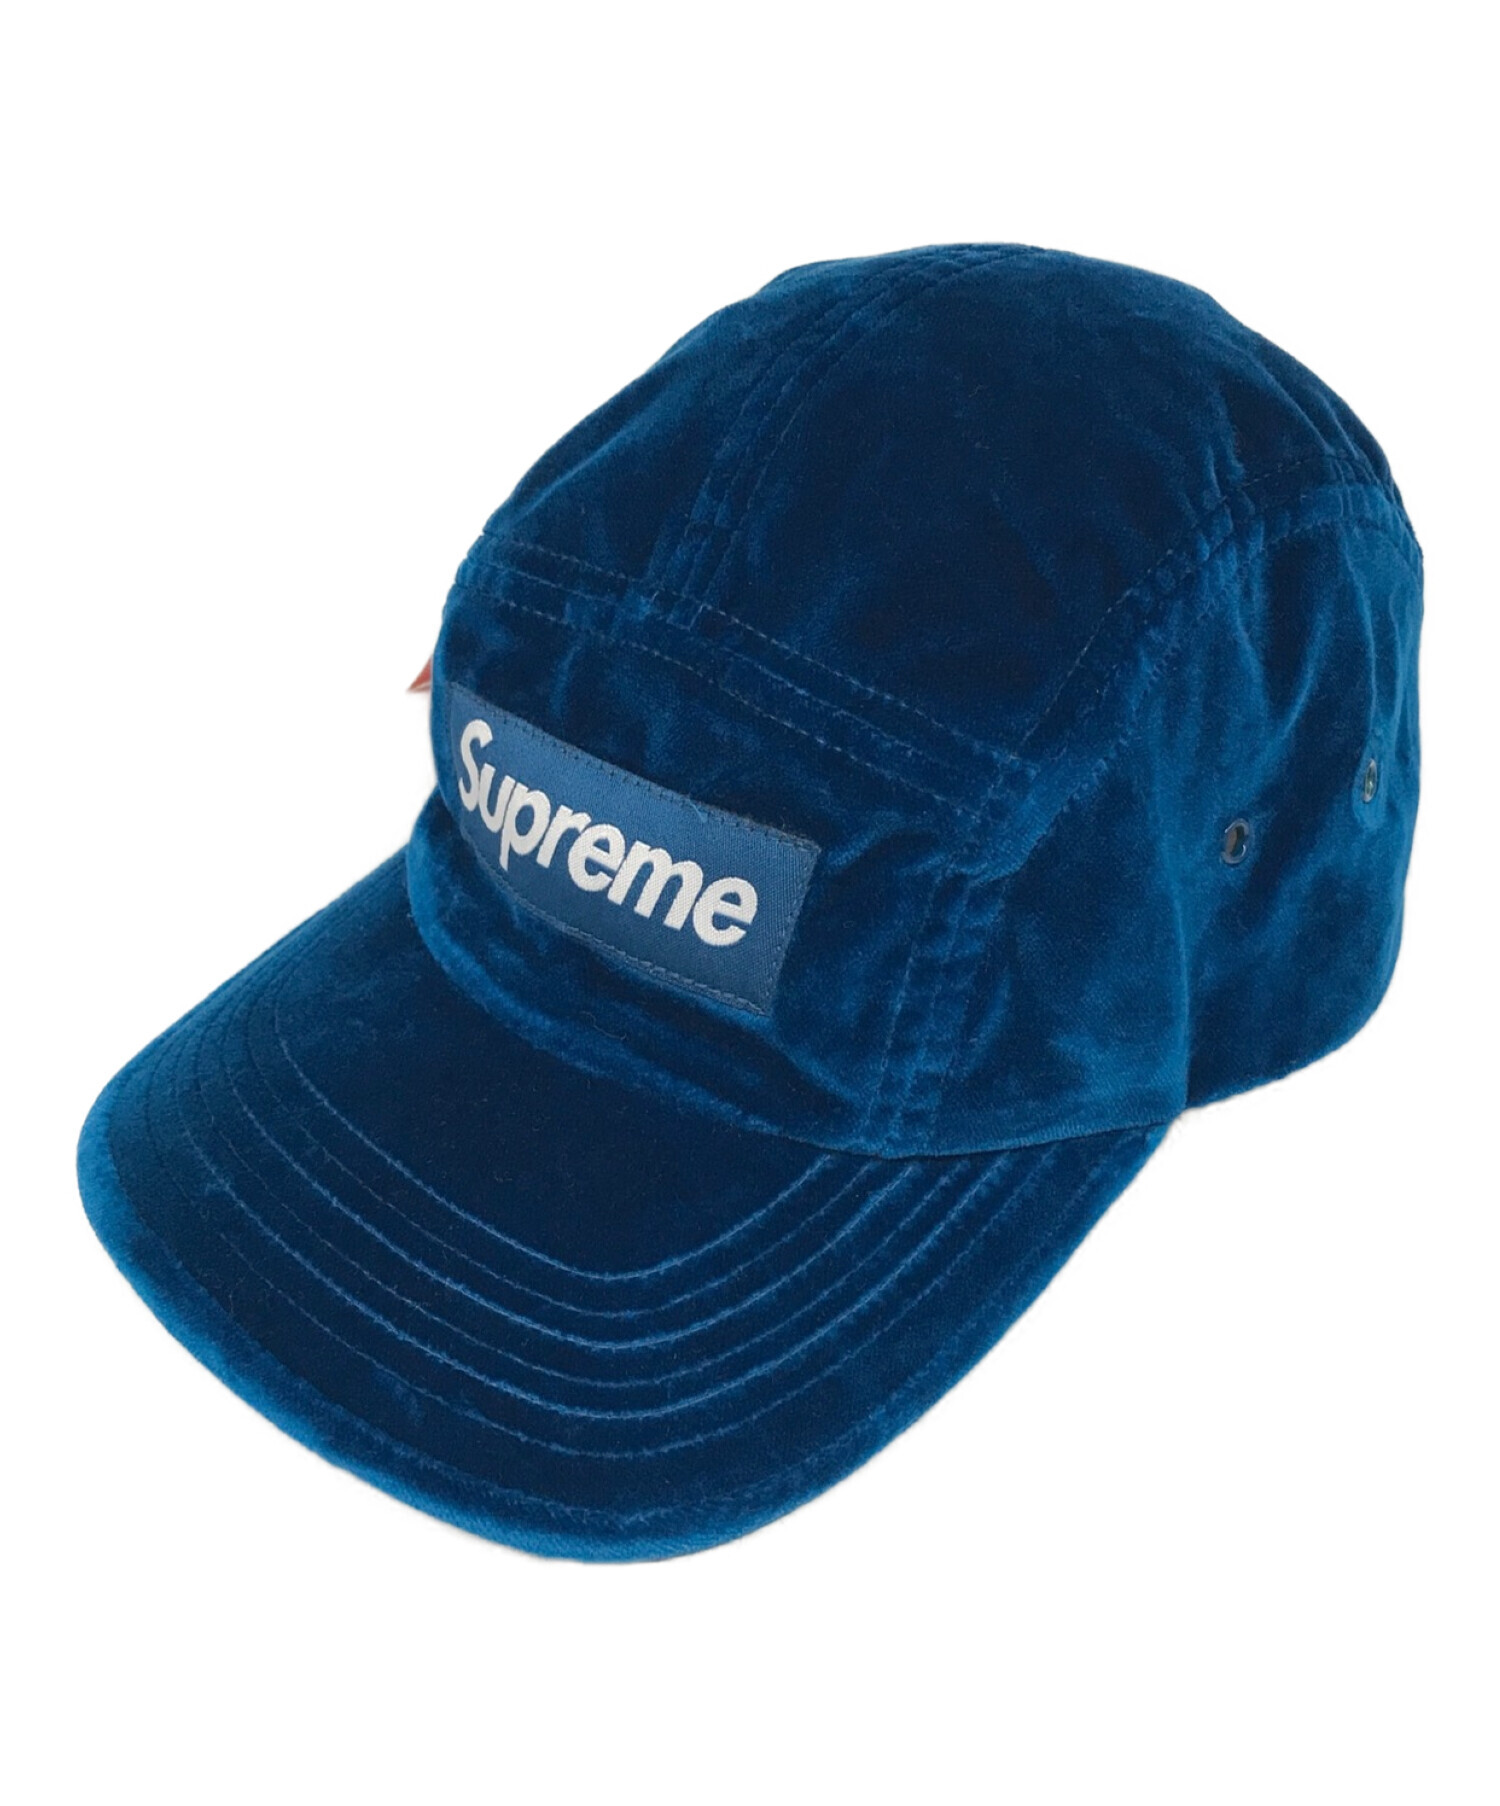 Supreme (シュプリーム) velvet camp cap/キャップ/ベロア ブルー 未使用品